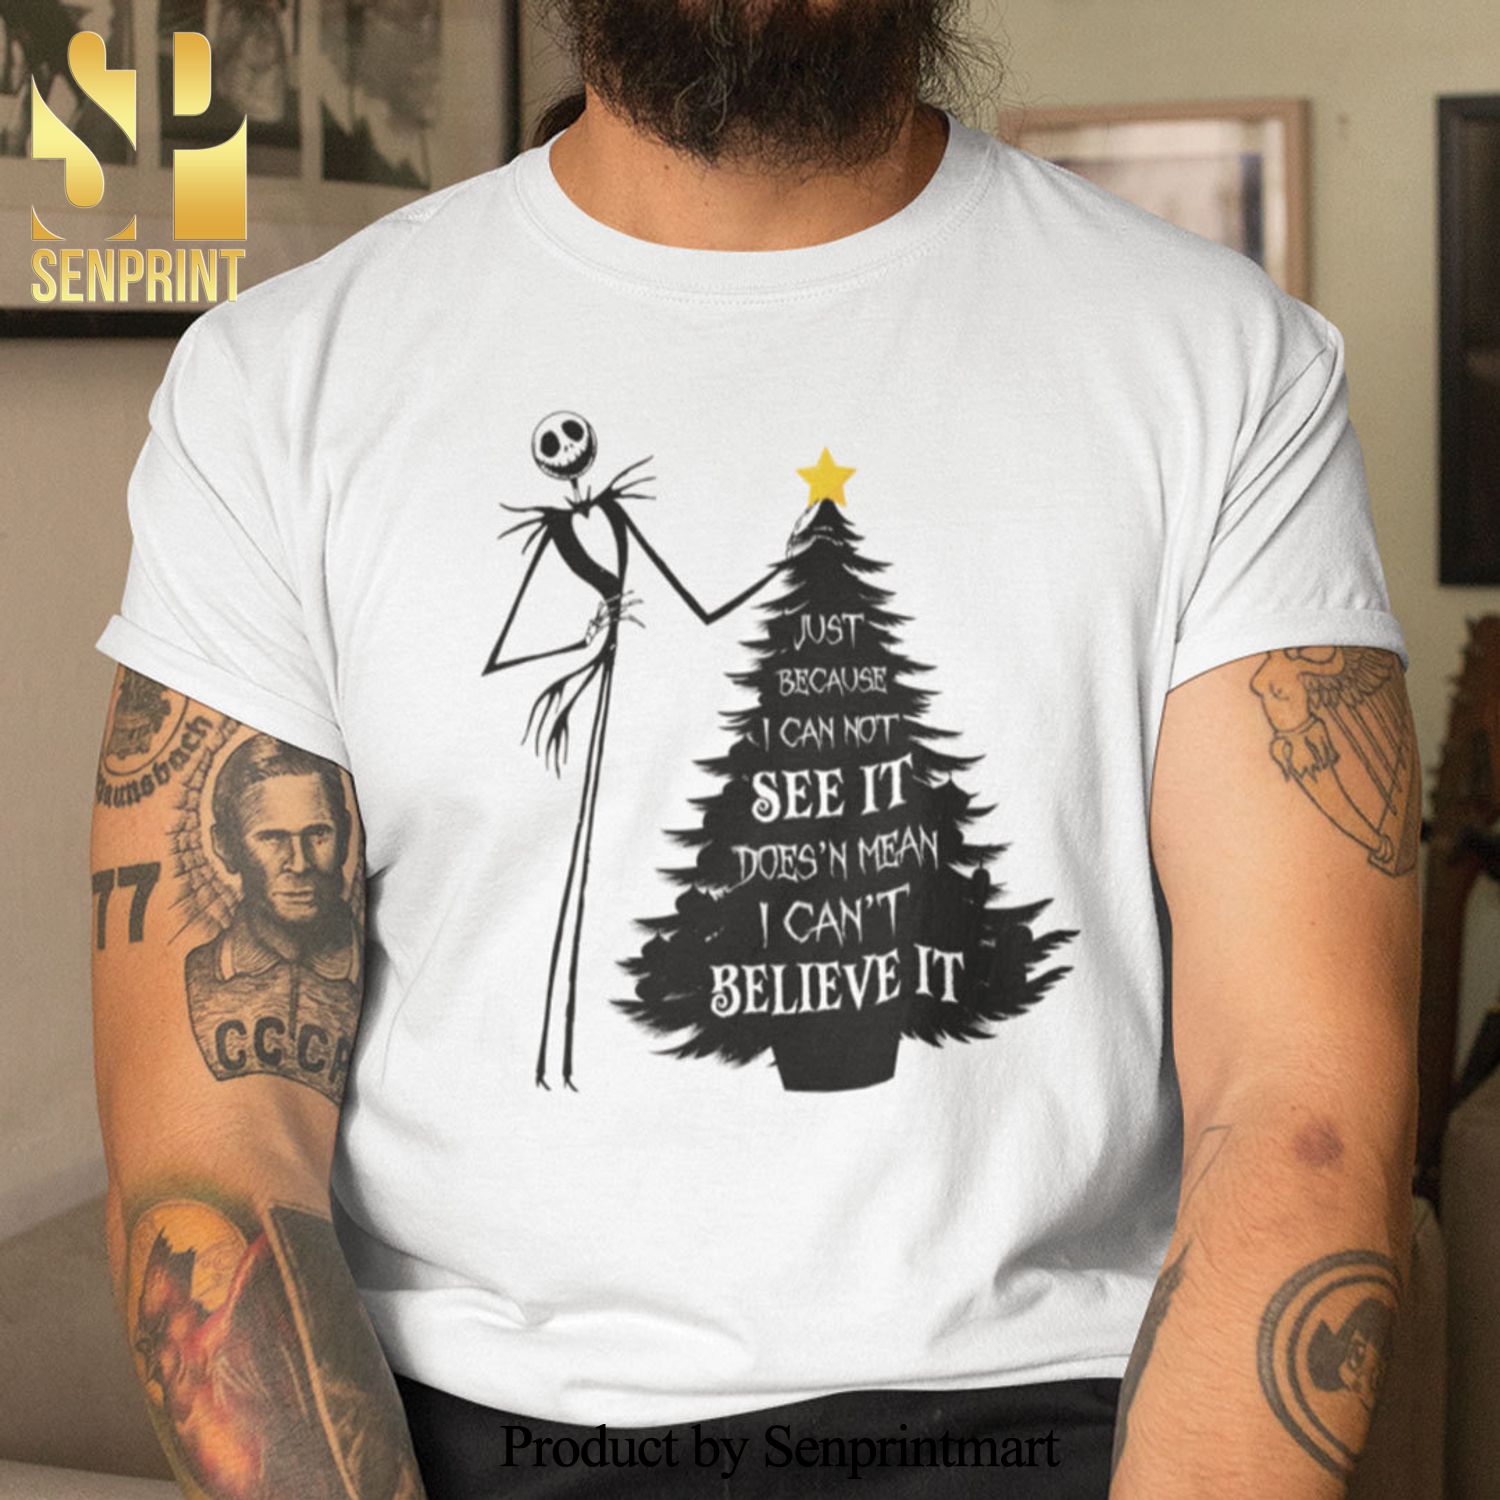 The Nightmare Christmas Gifts Shirts Jack Skellington Xmas Tree